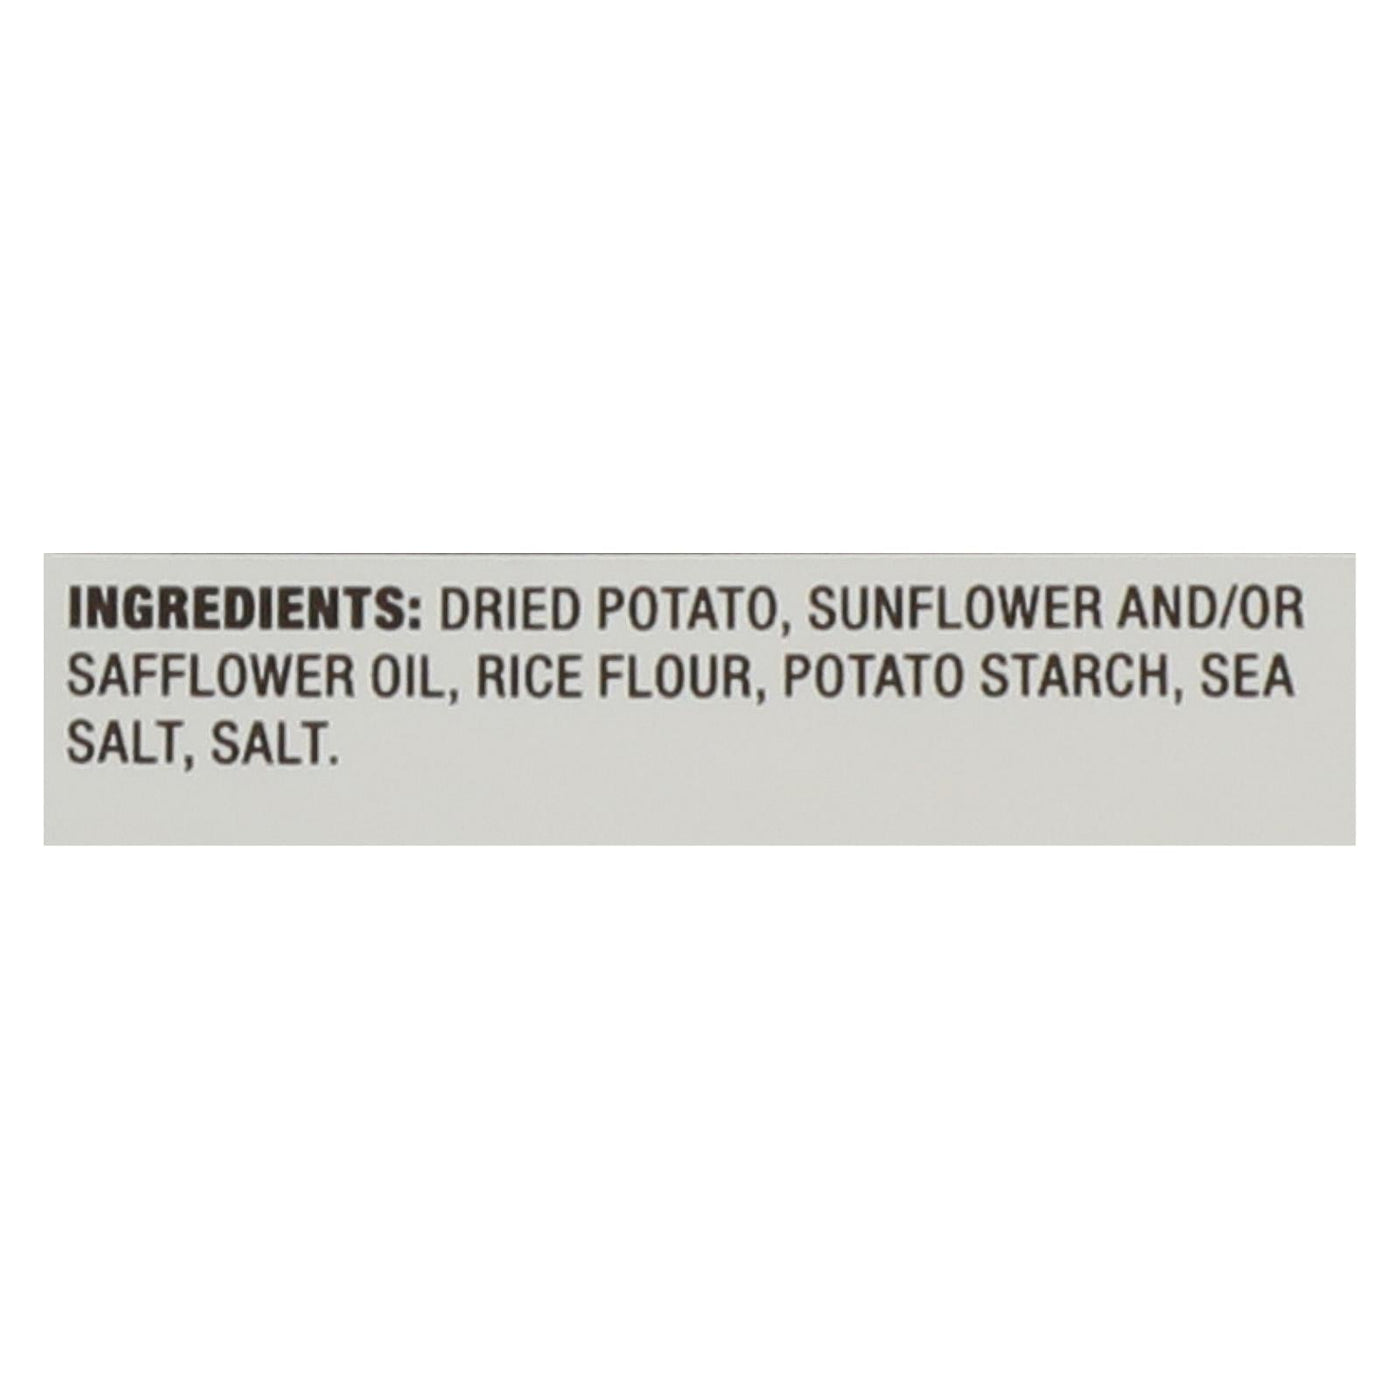 Buy Popchips Potato Chip - Sea Salt - Case Of 24 - 0.8 Oz.  at OnlyNaturals.us